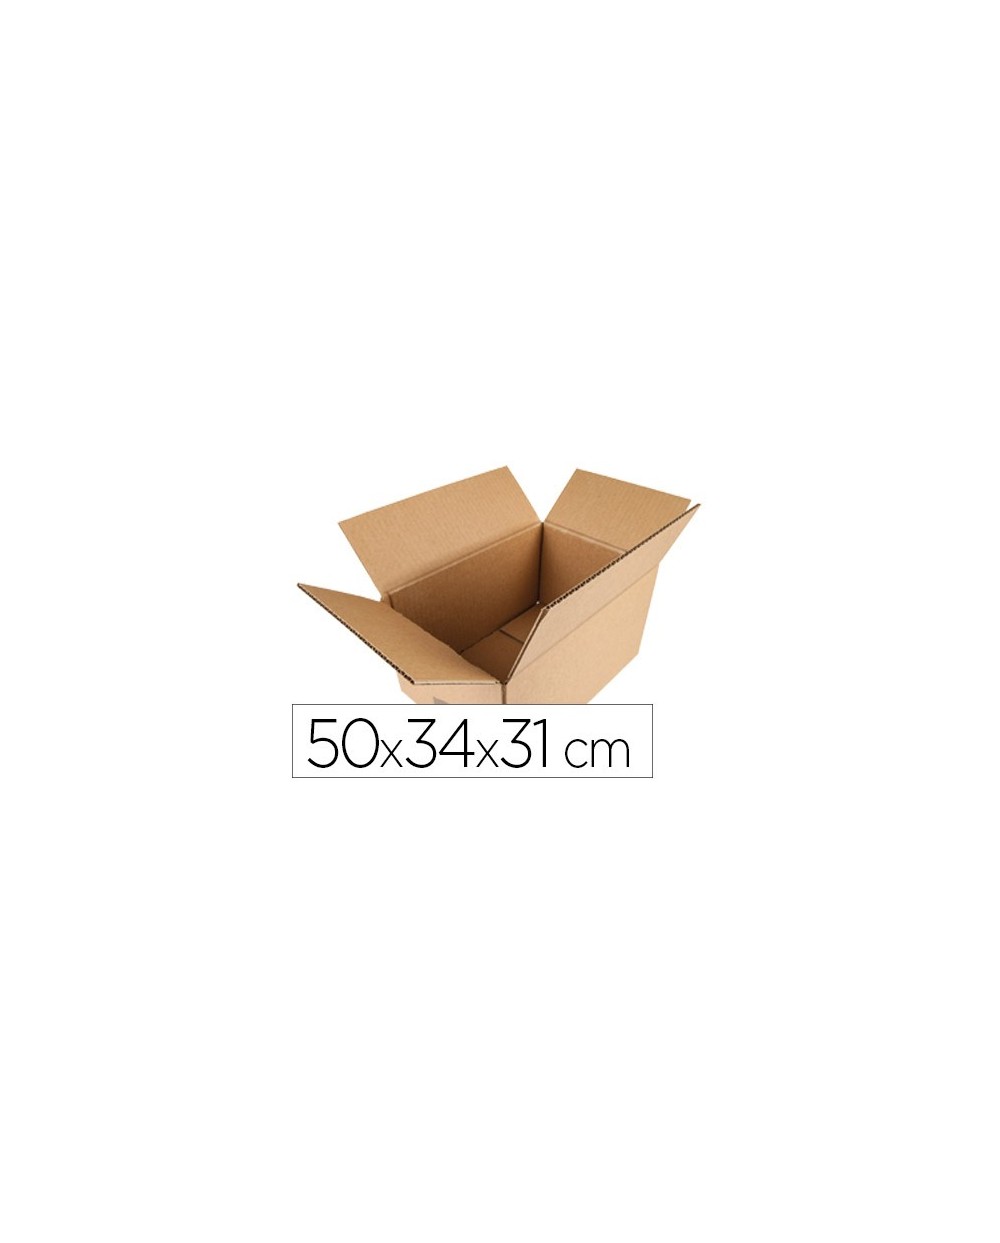 Caja para embalar q connect americana medidas 500x340x310 mm espesor carton 5 mm